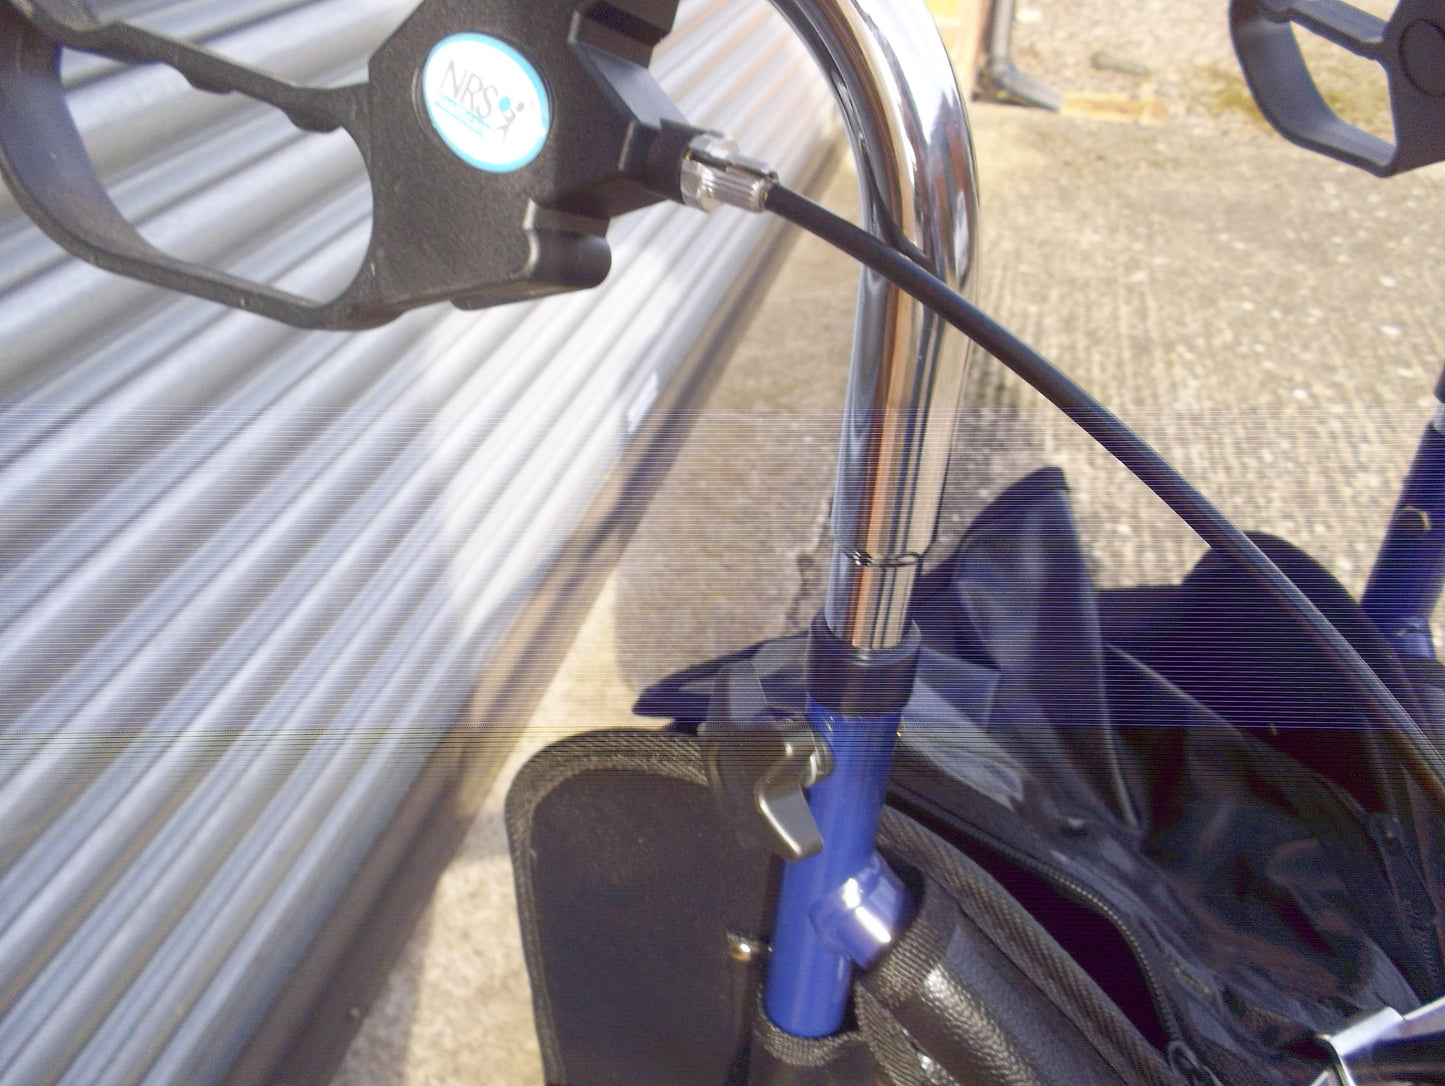 NRS 3 Wheel Rollator with Bag Lightweight Sturdy Wheels Adjustable